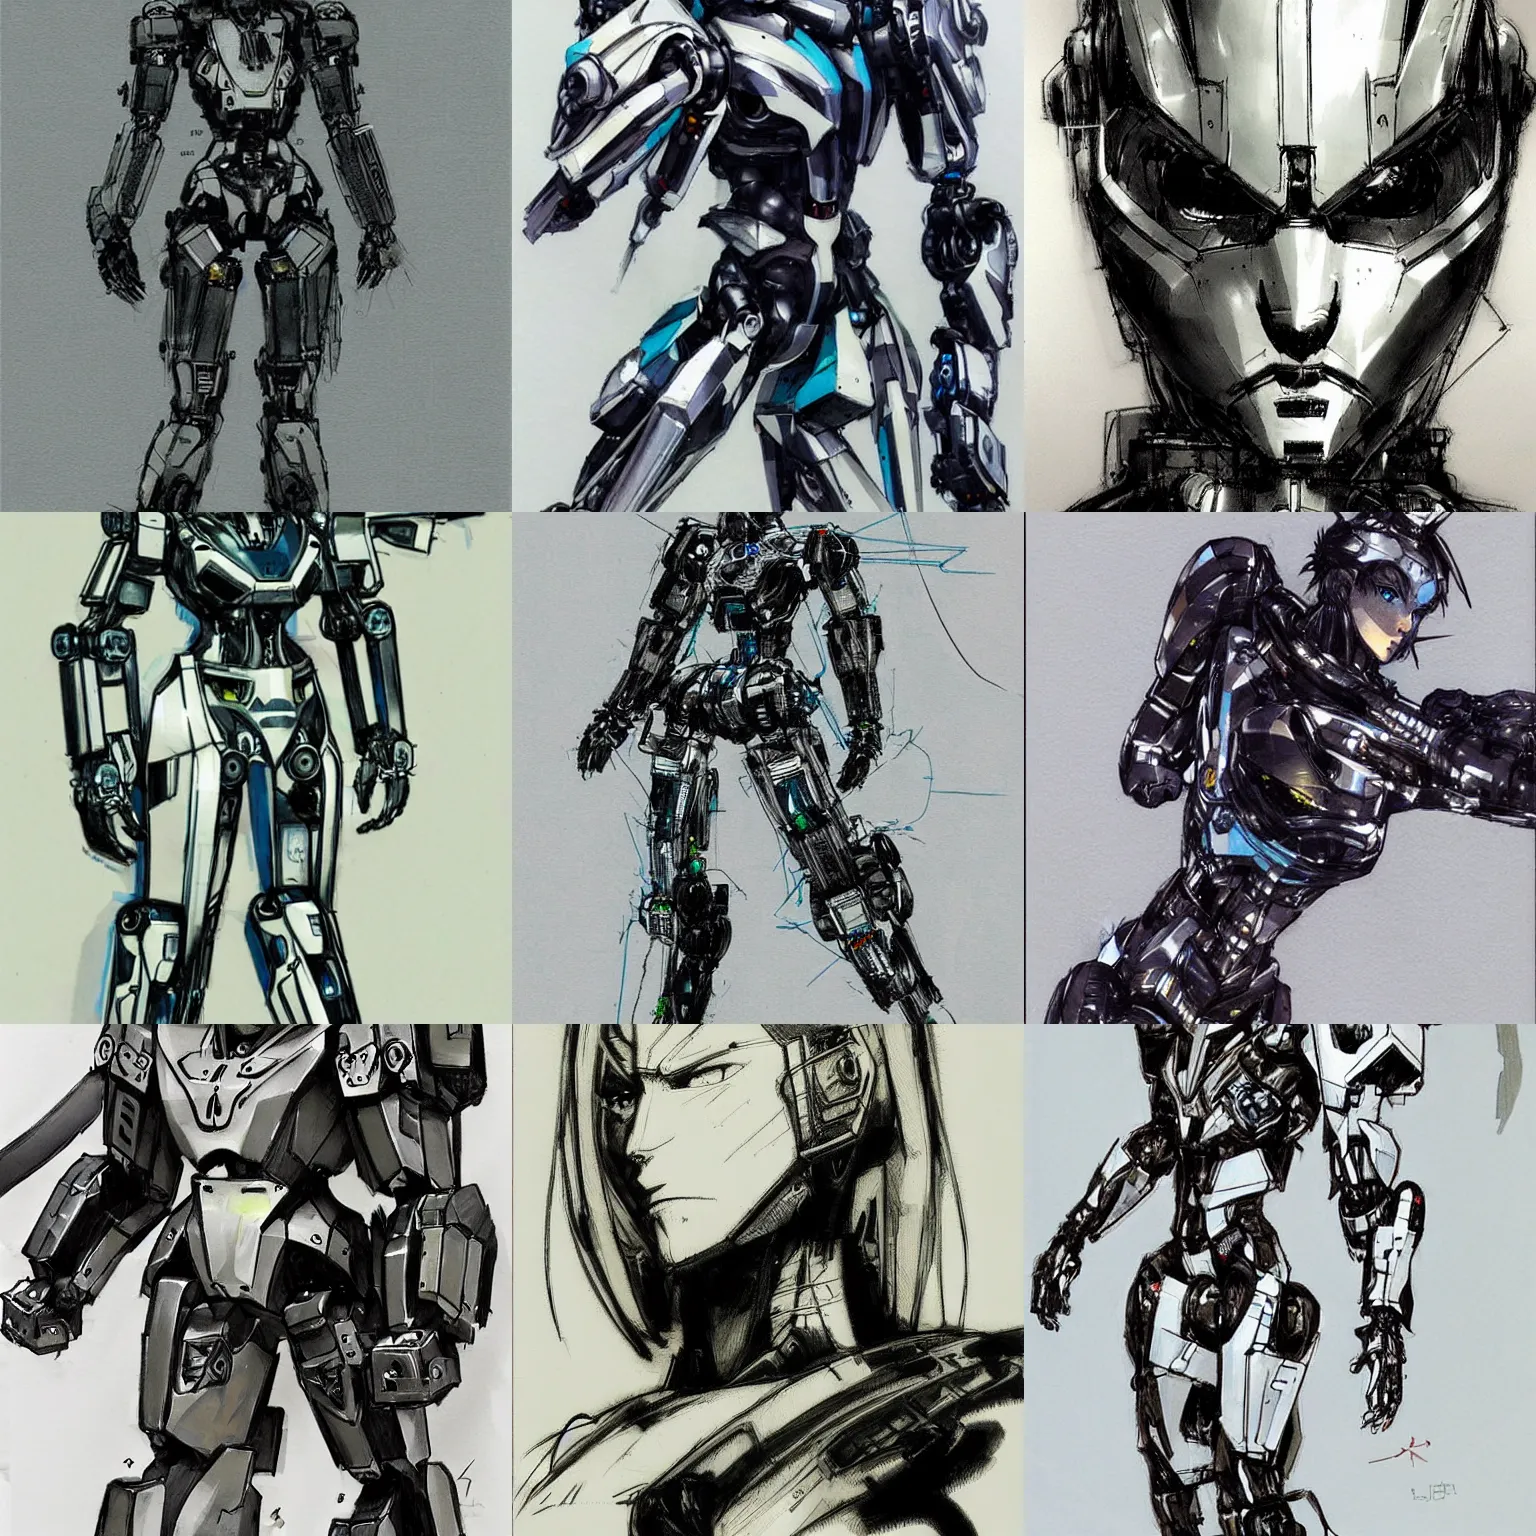 Prompt: Humanoid robot concept art, sketch by Yoji Shinkawa